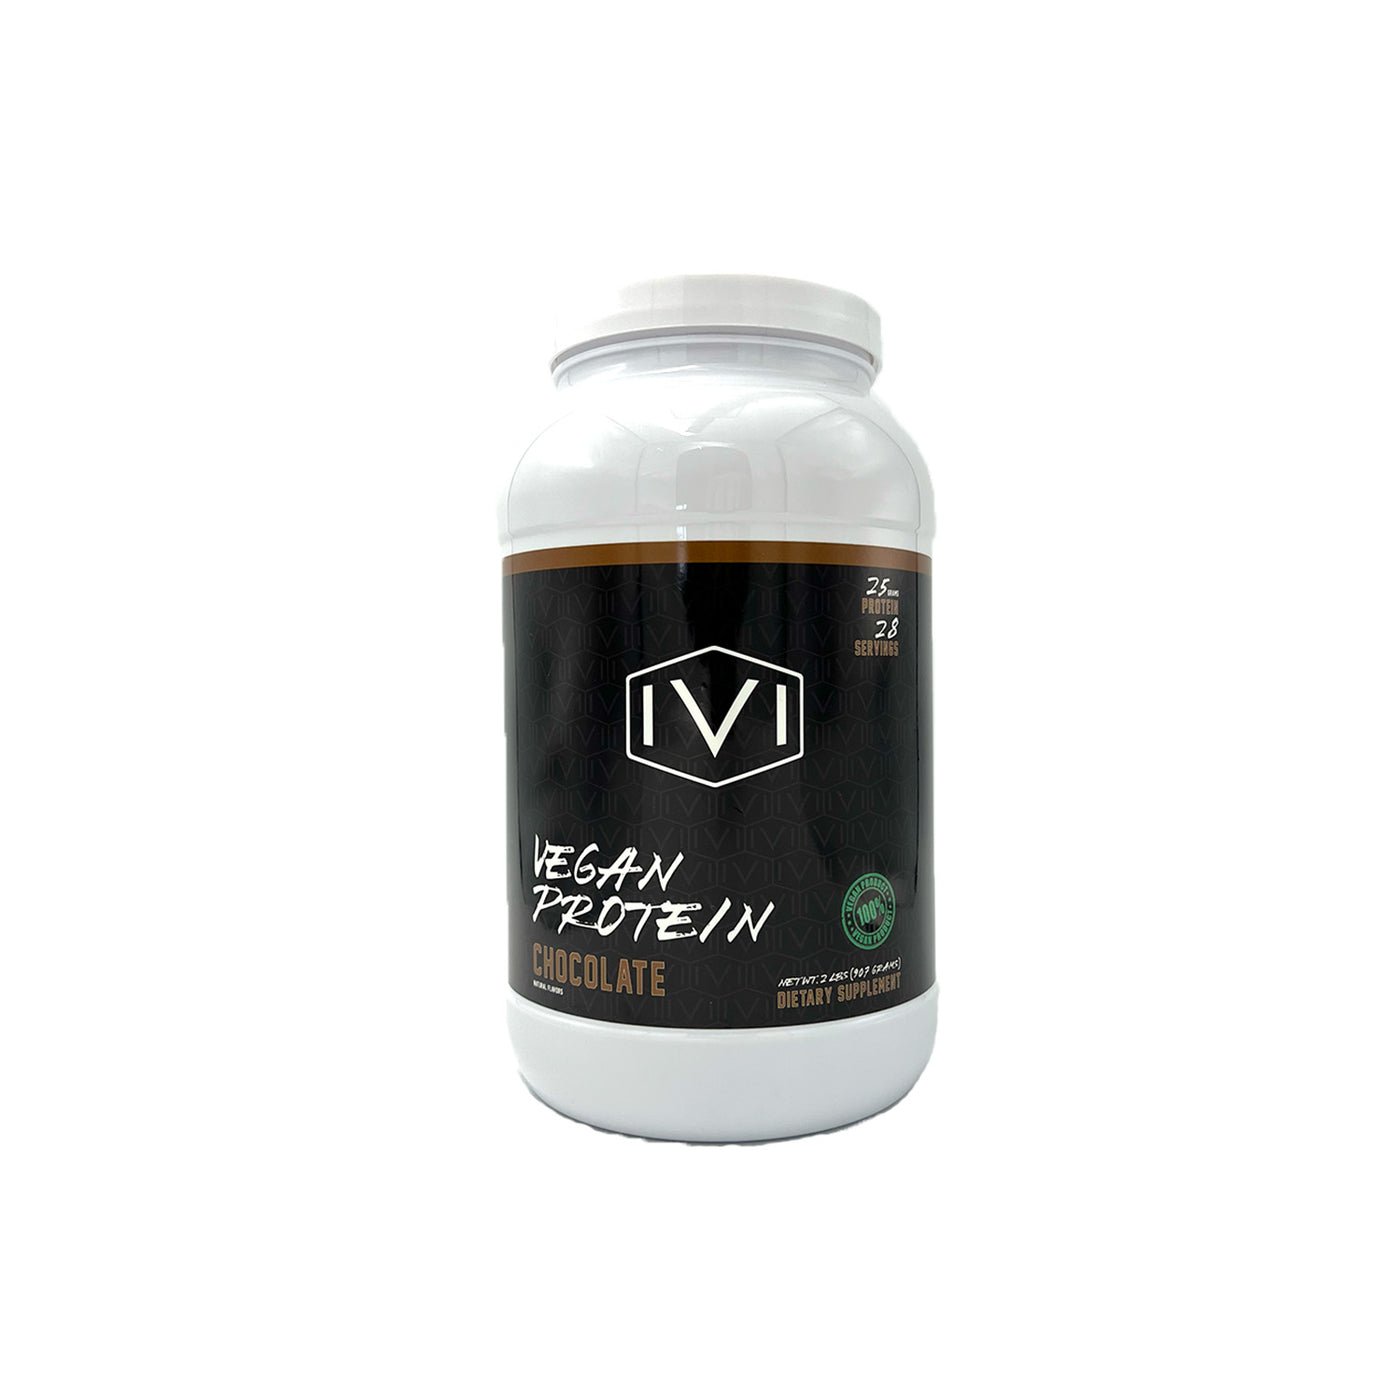 IVI Vegan Protein : Chocolate